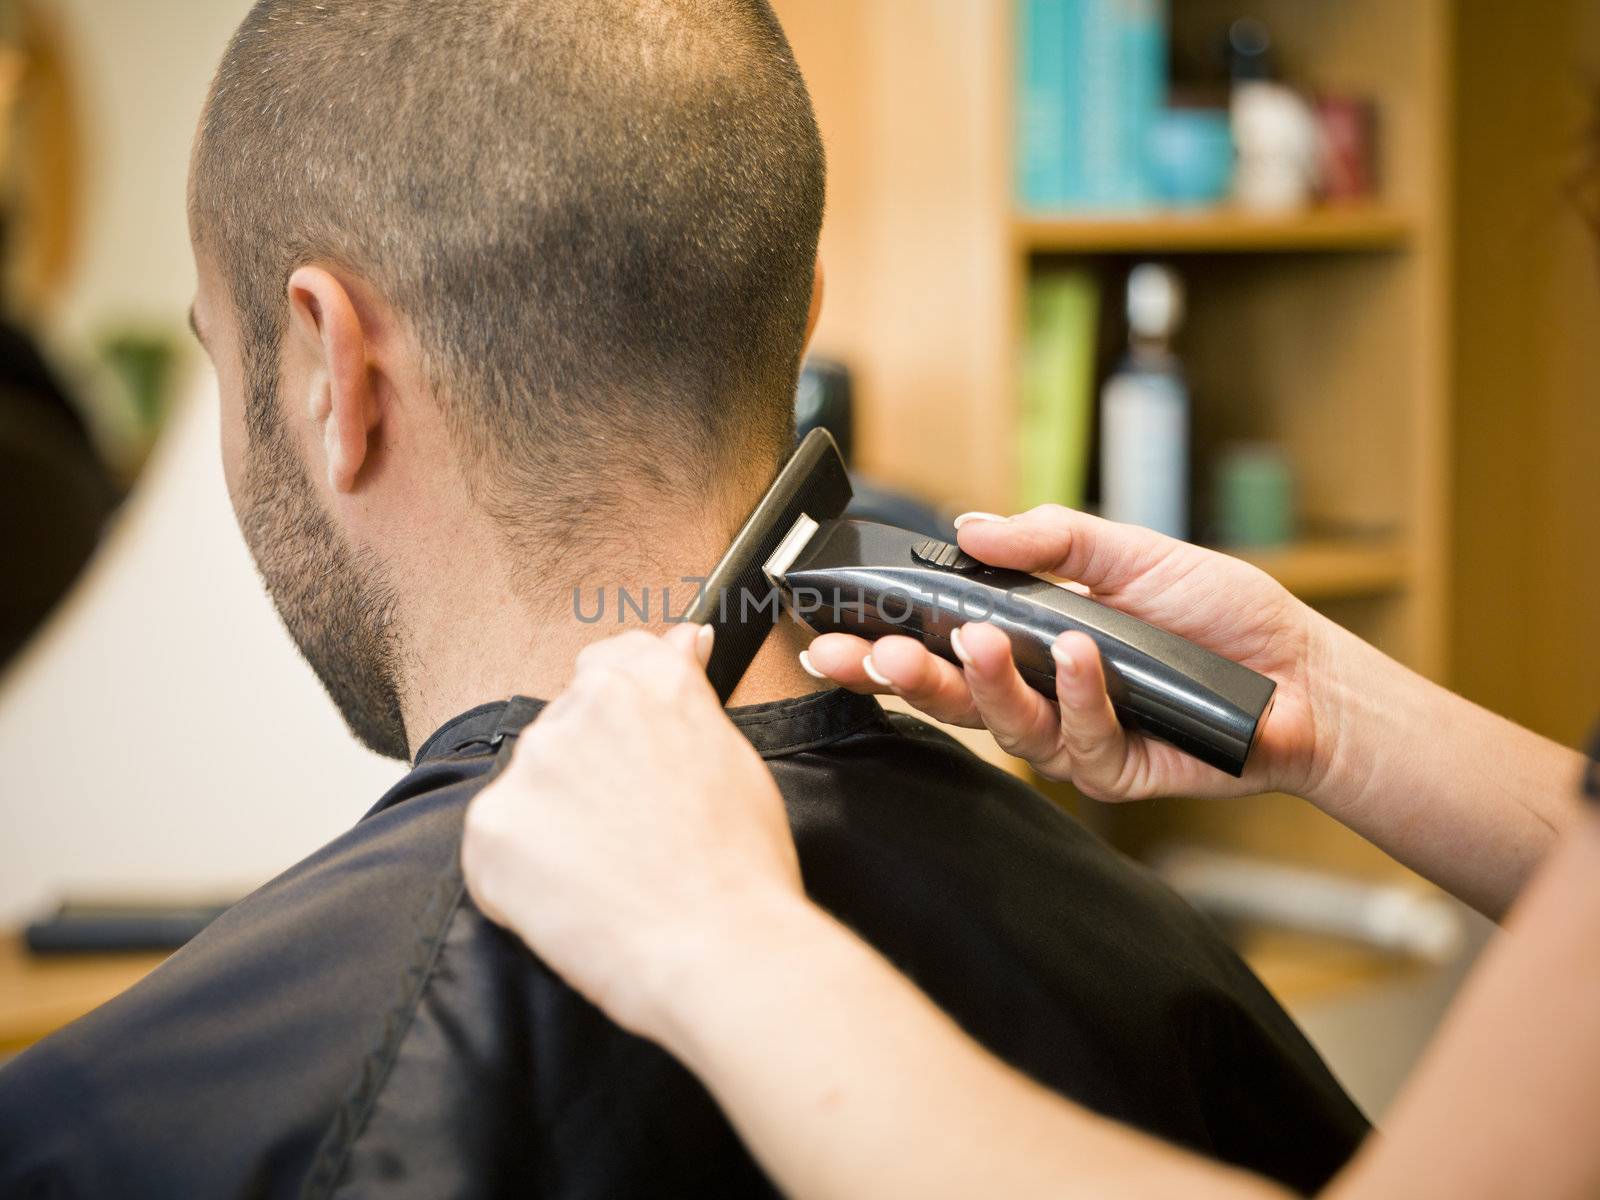 Hair salon situation by gemenacom